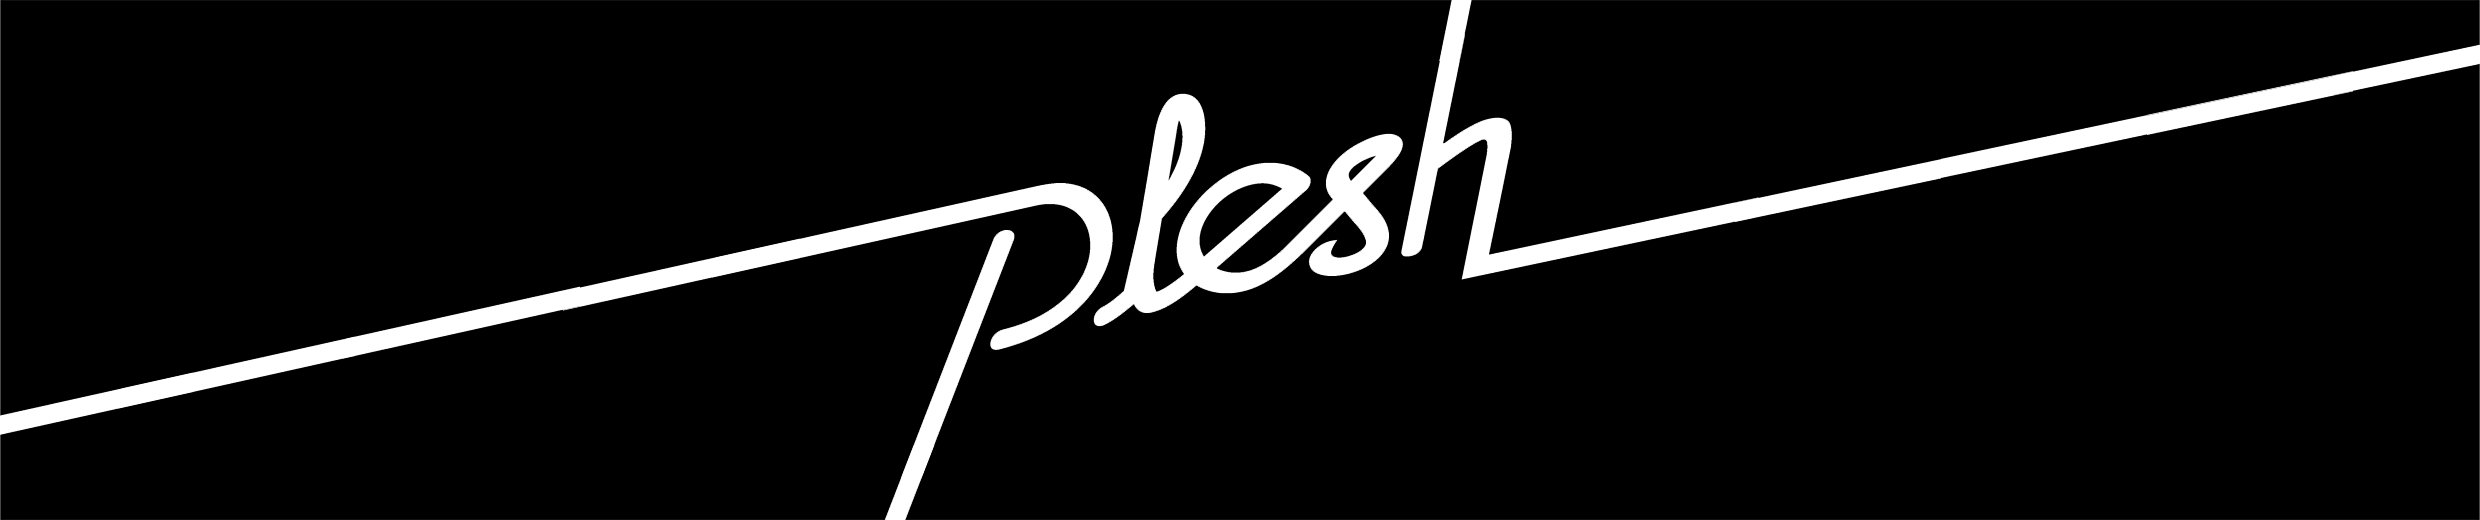 Plesh logo